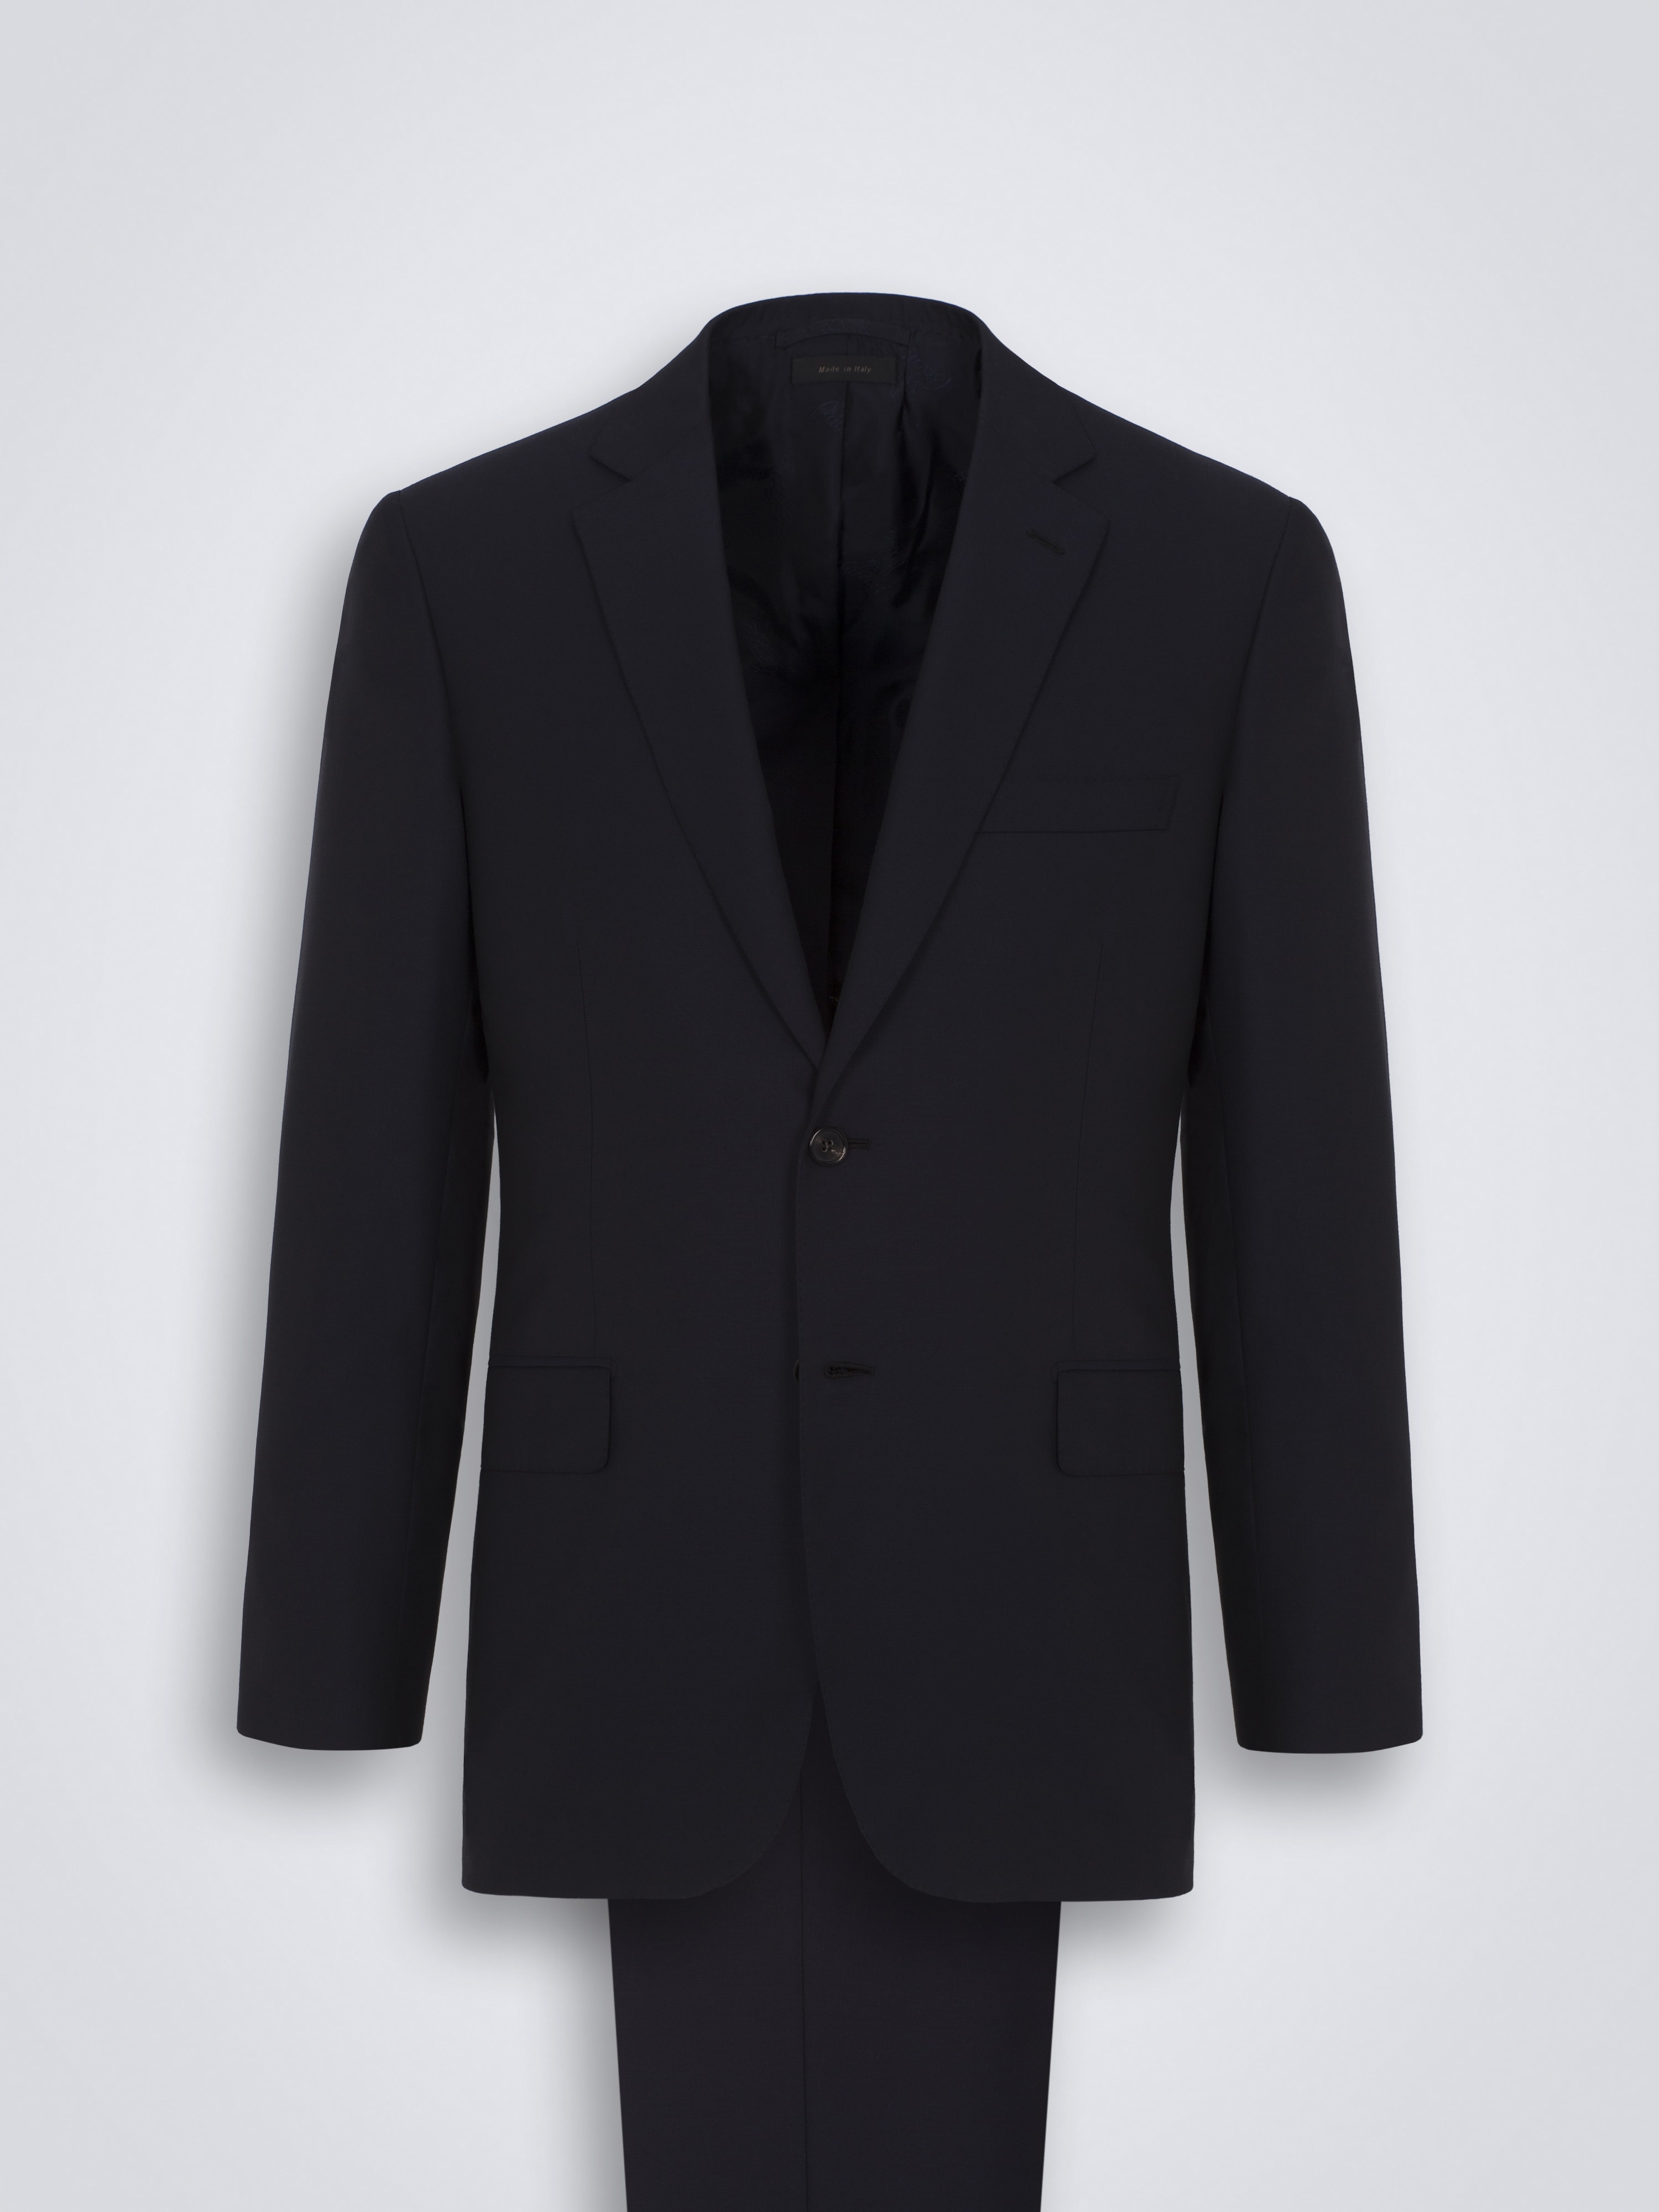 Essential ブルニコ スーツ ネイビーブルースーパー160バージンウール